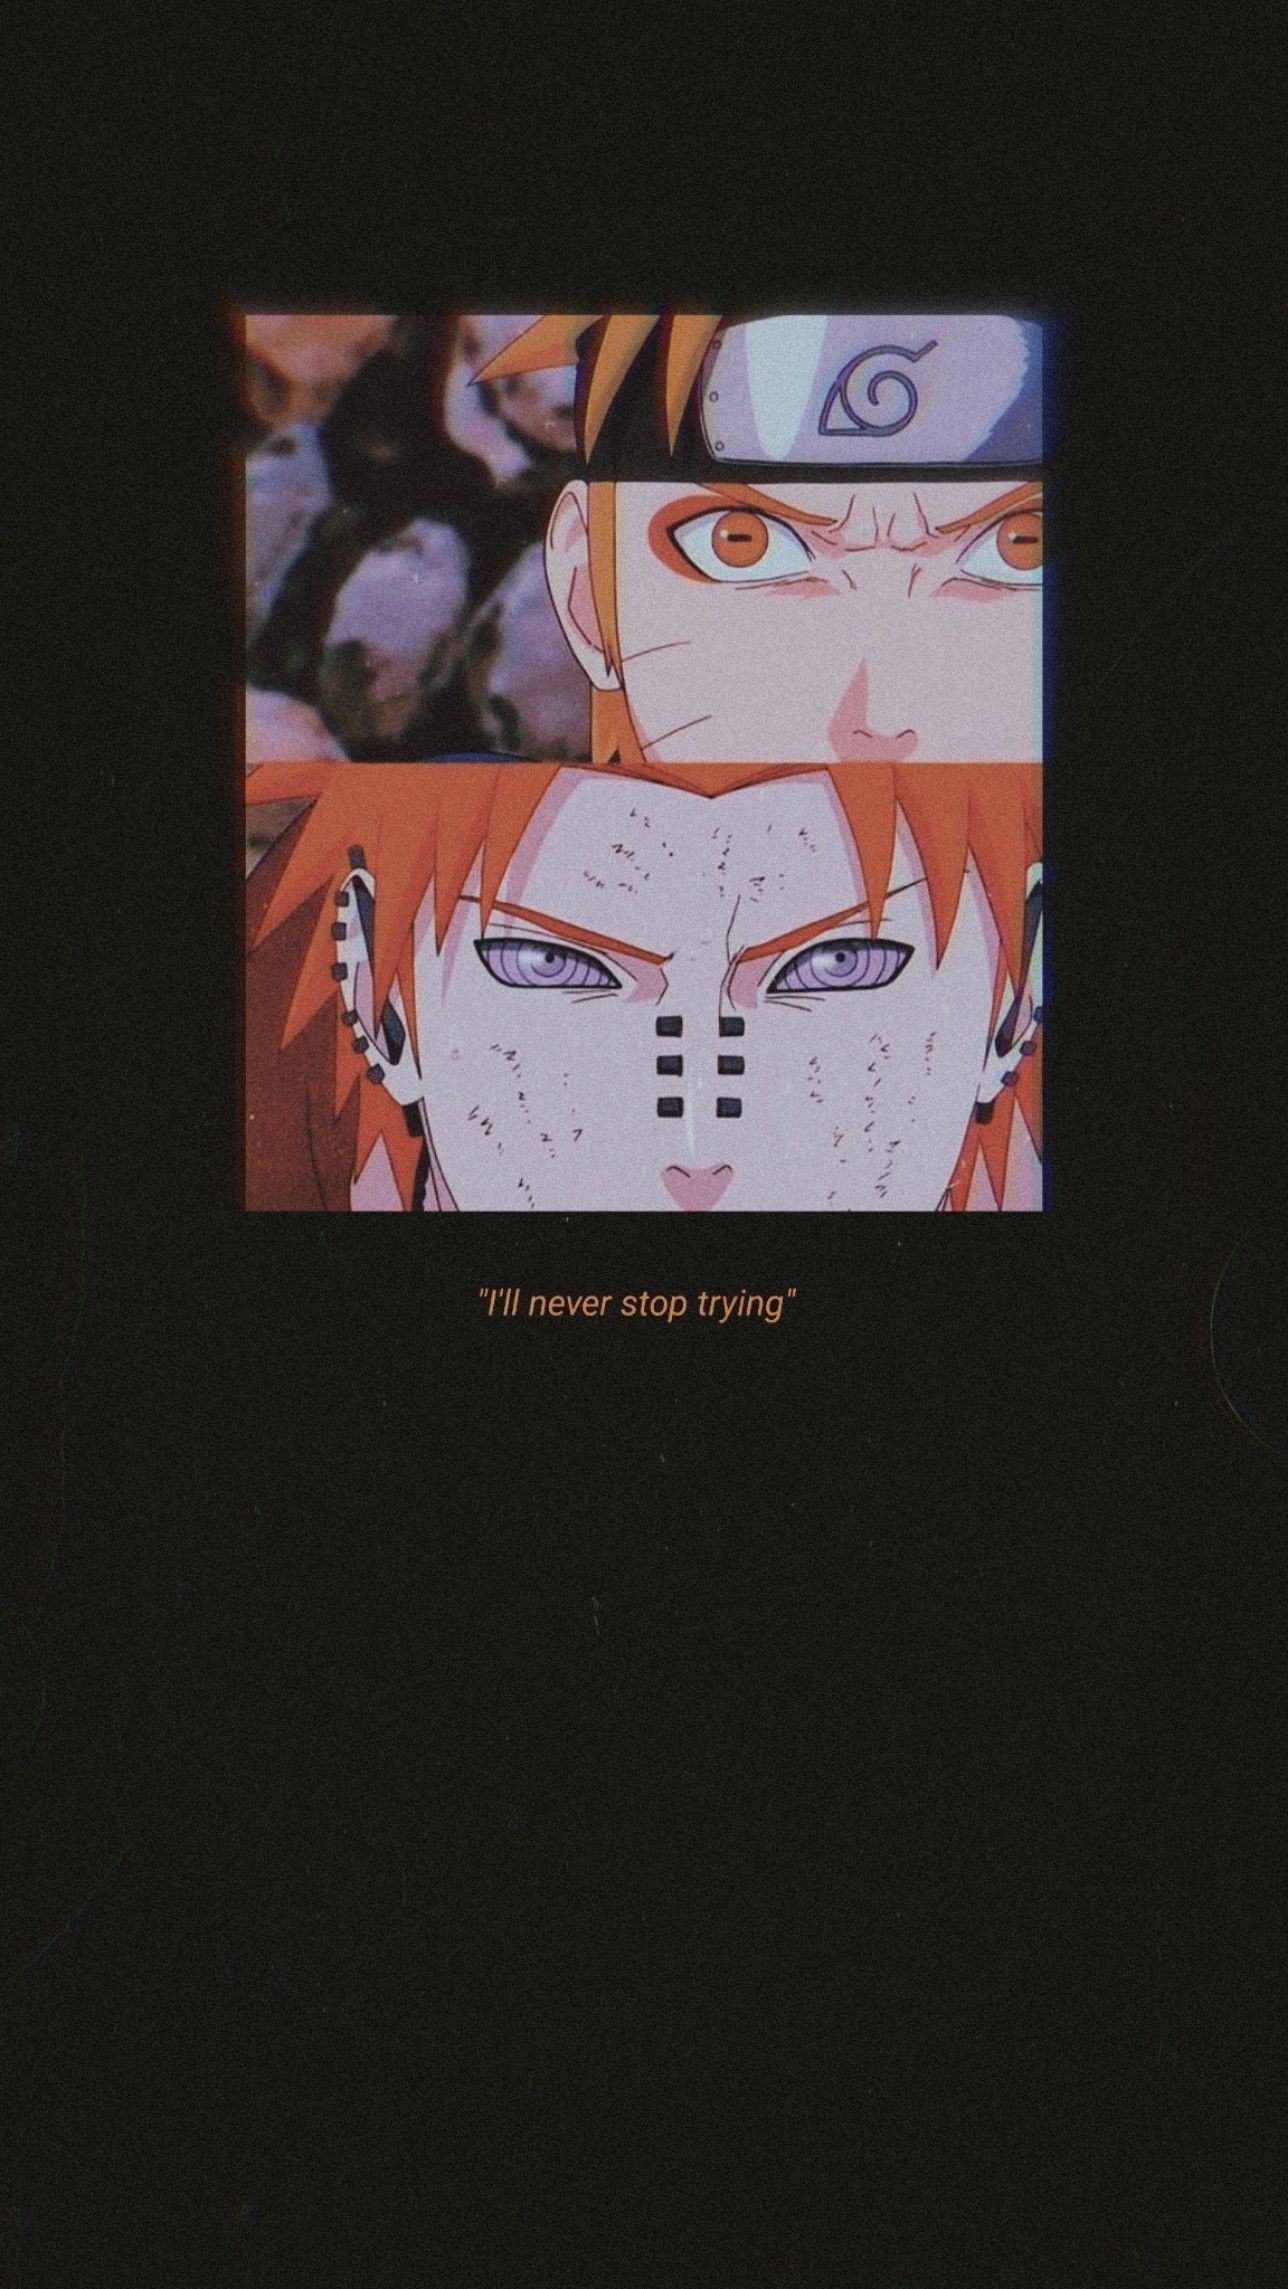 Naruto wallpaper aesthetic for phone in 2020 naruto - Naruto